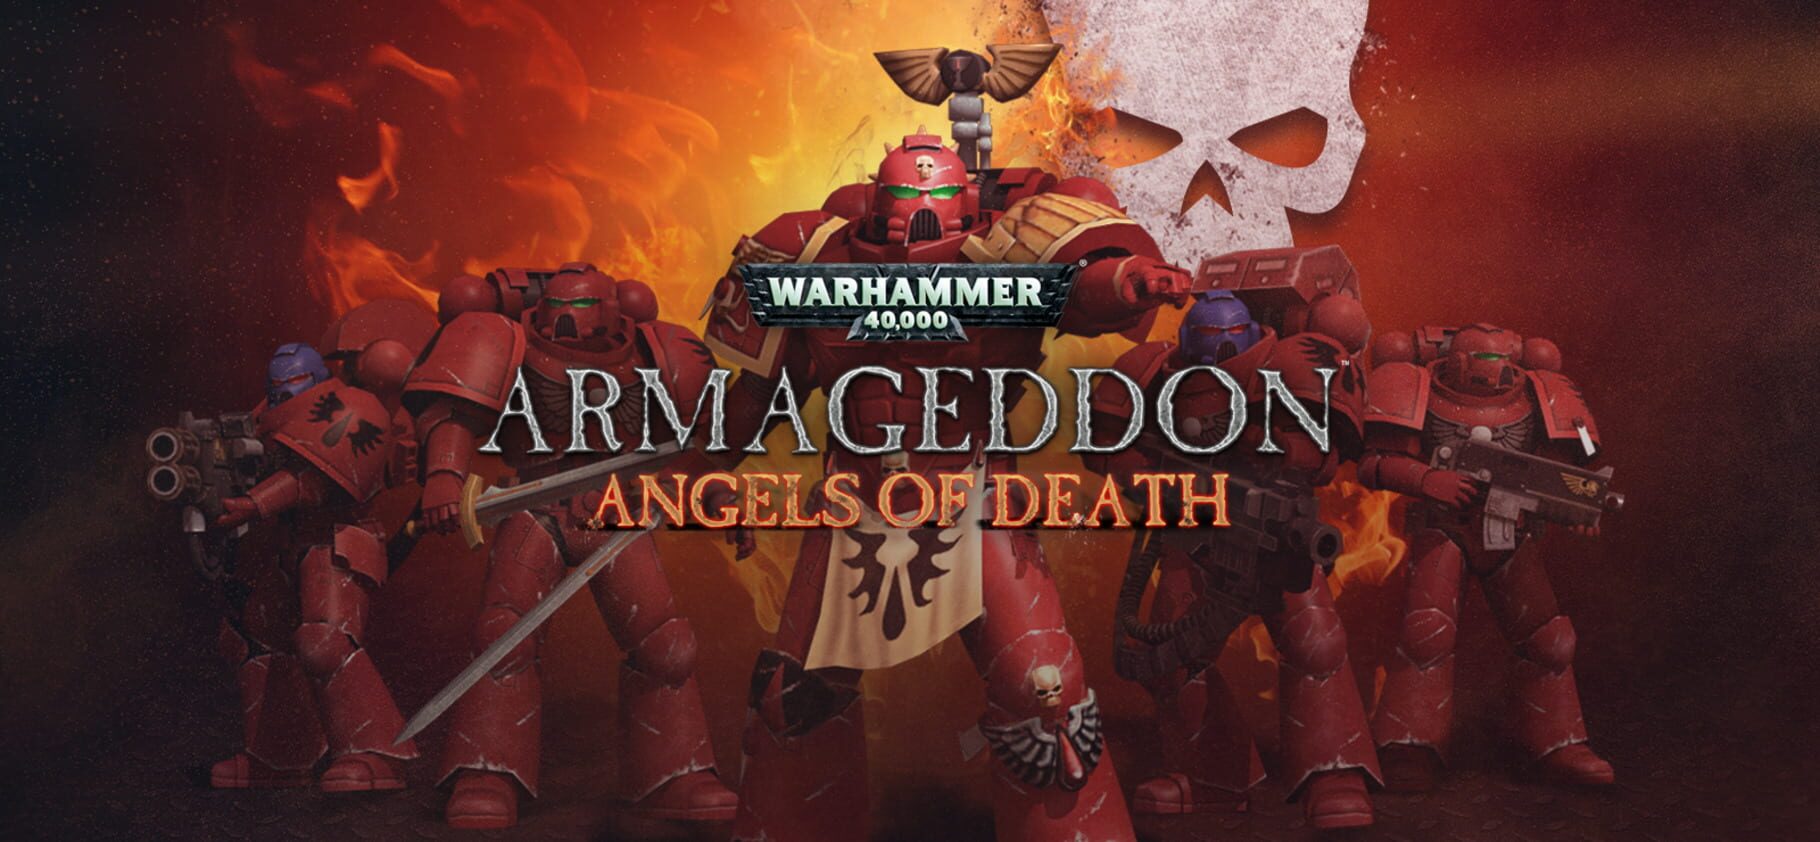 Arte - Warhammer 40,000: Armageddon - Angels of Death